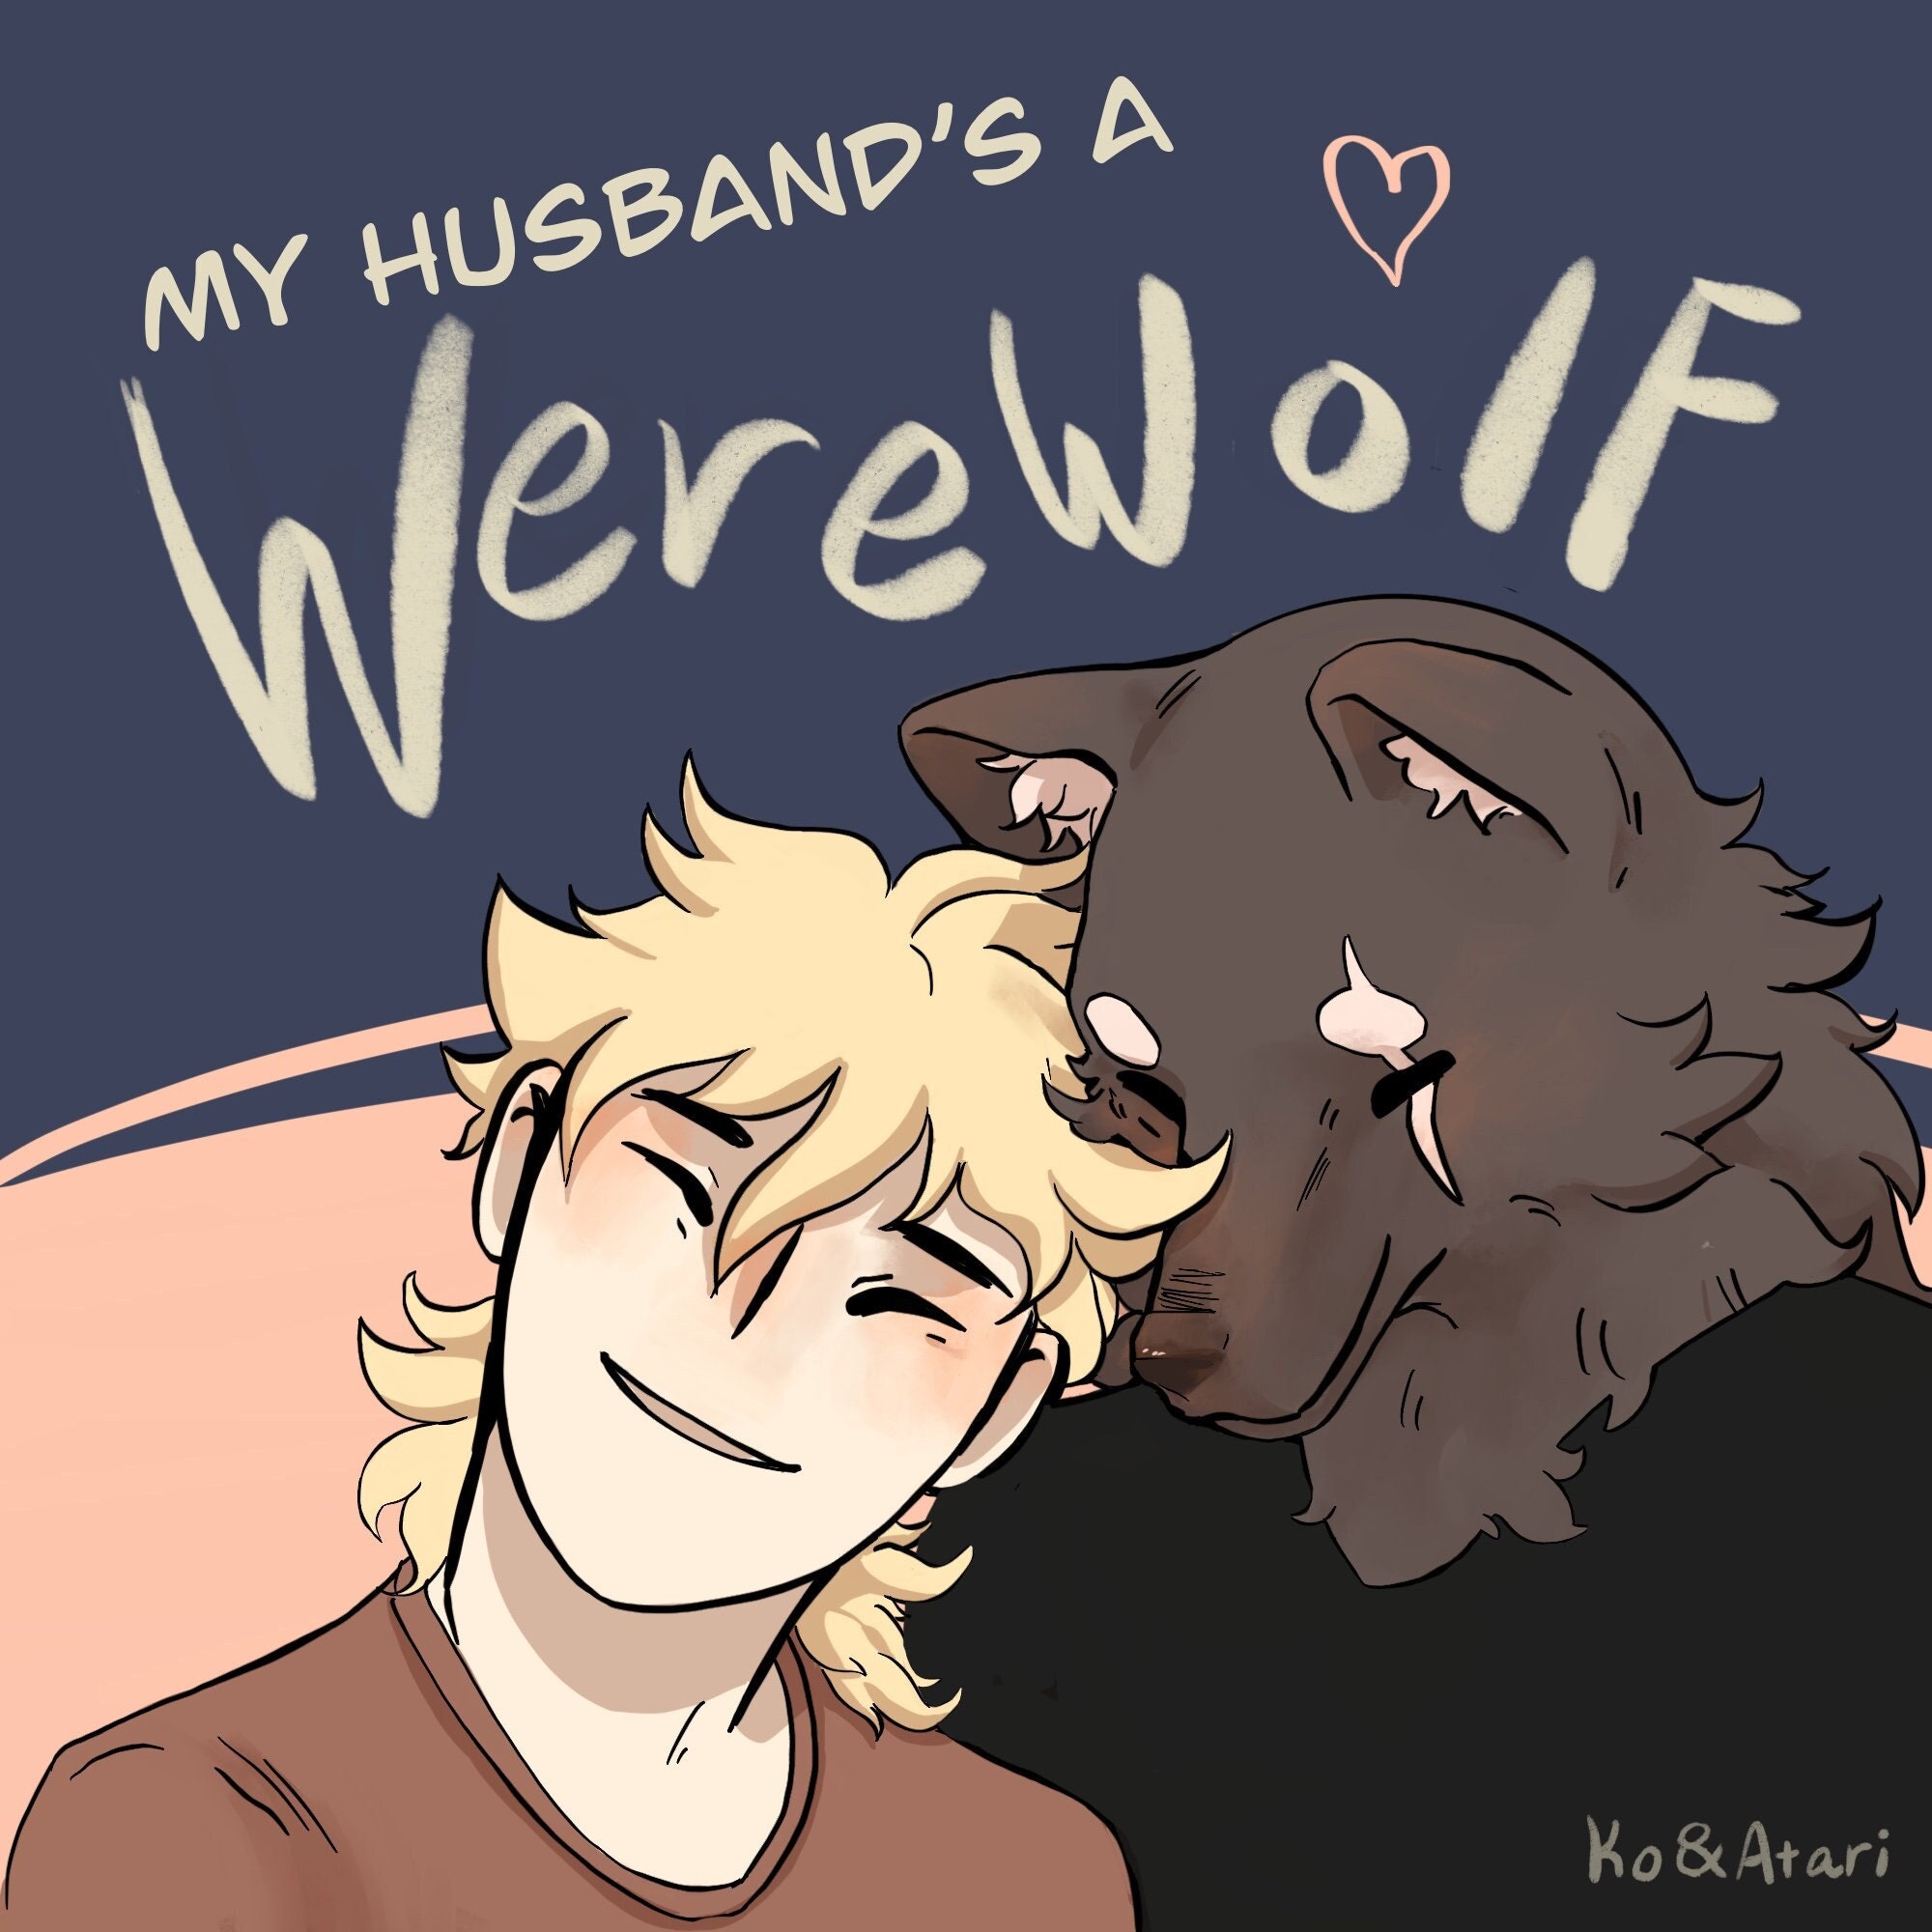 wife found out hsband is werwolf